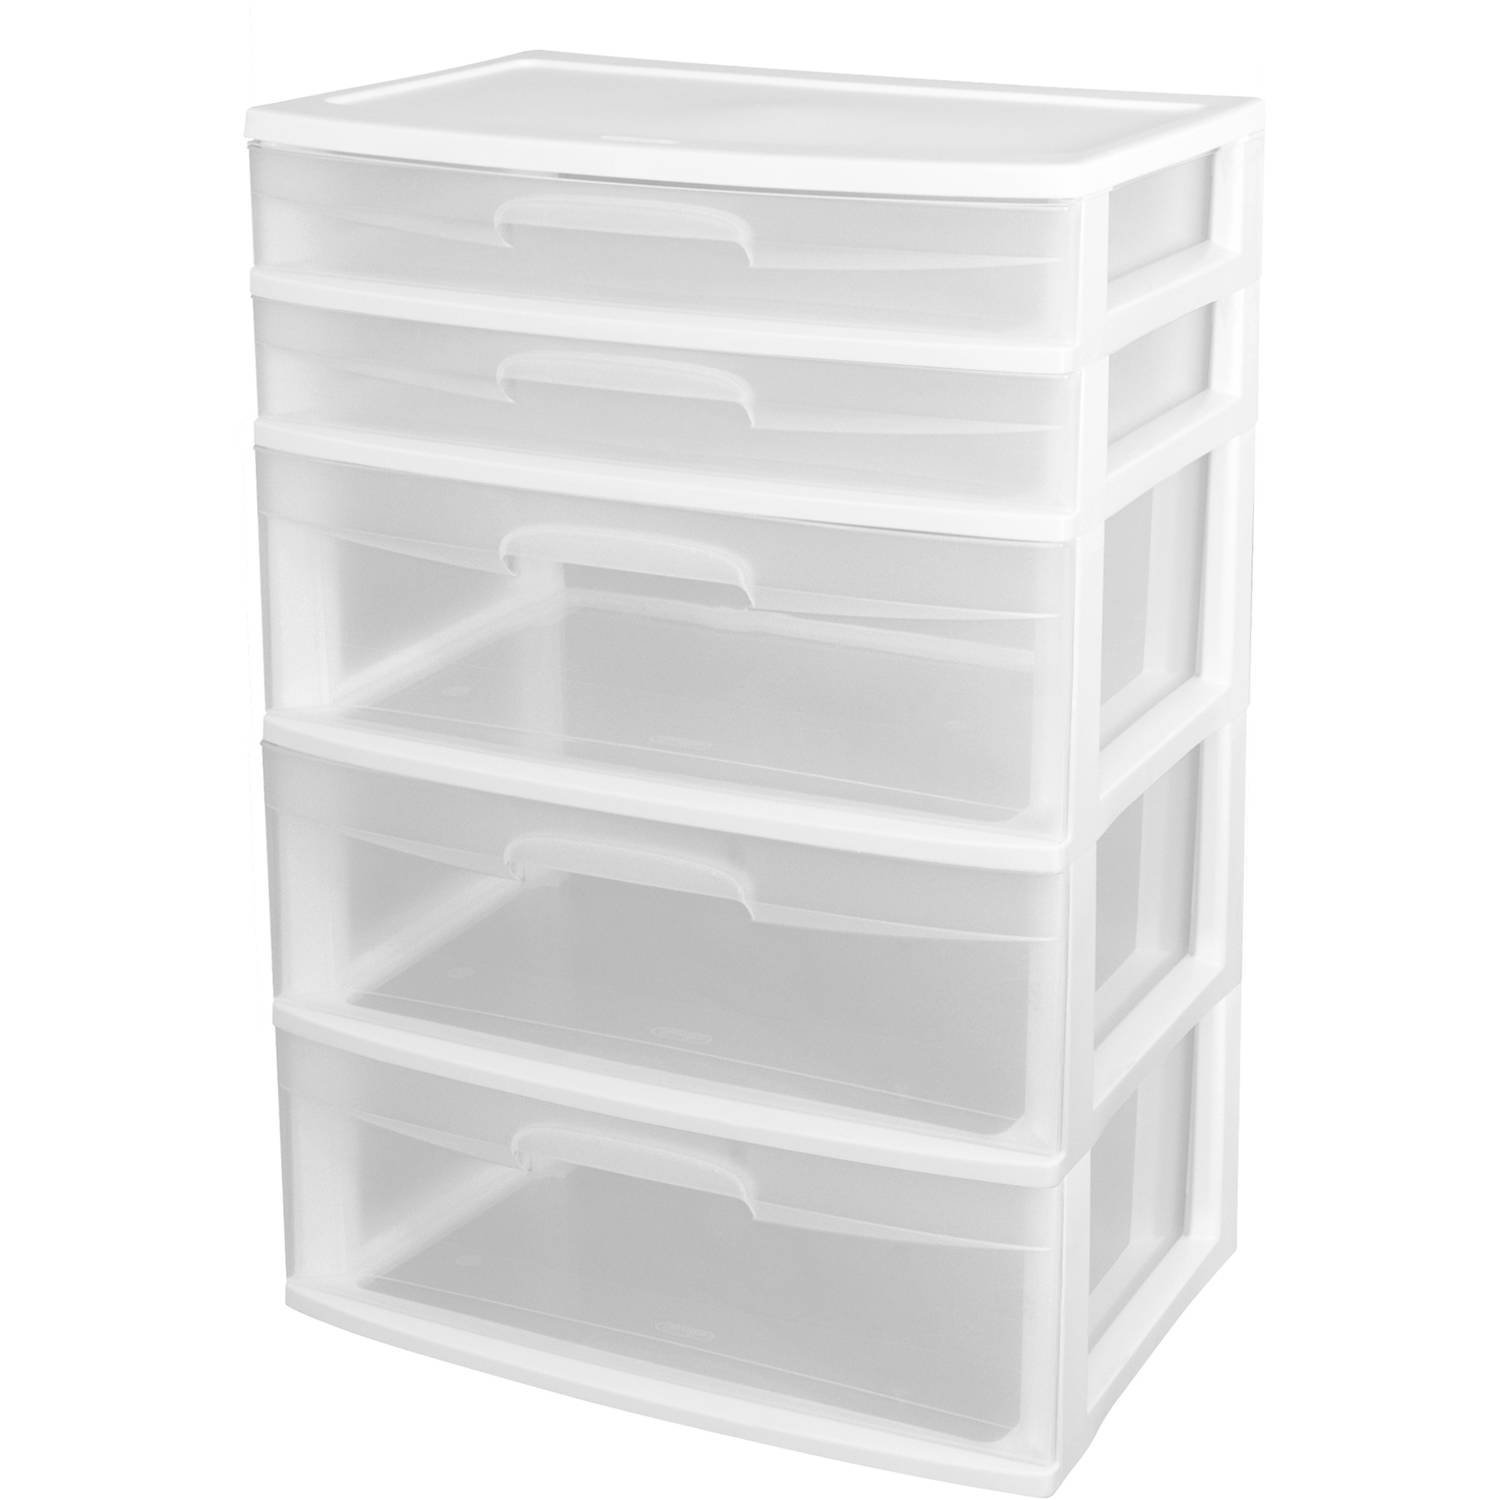 plastic storage drawers amazon.com: sterilite 5 drawer wide tower plastic storage cabinet  organization - white ODCGZAX